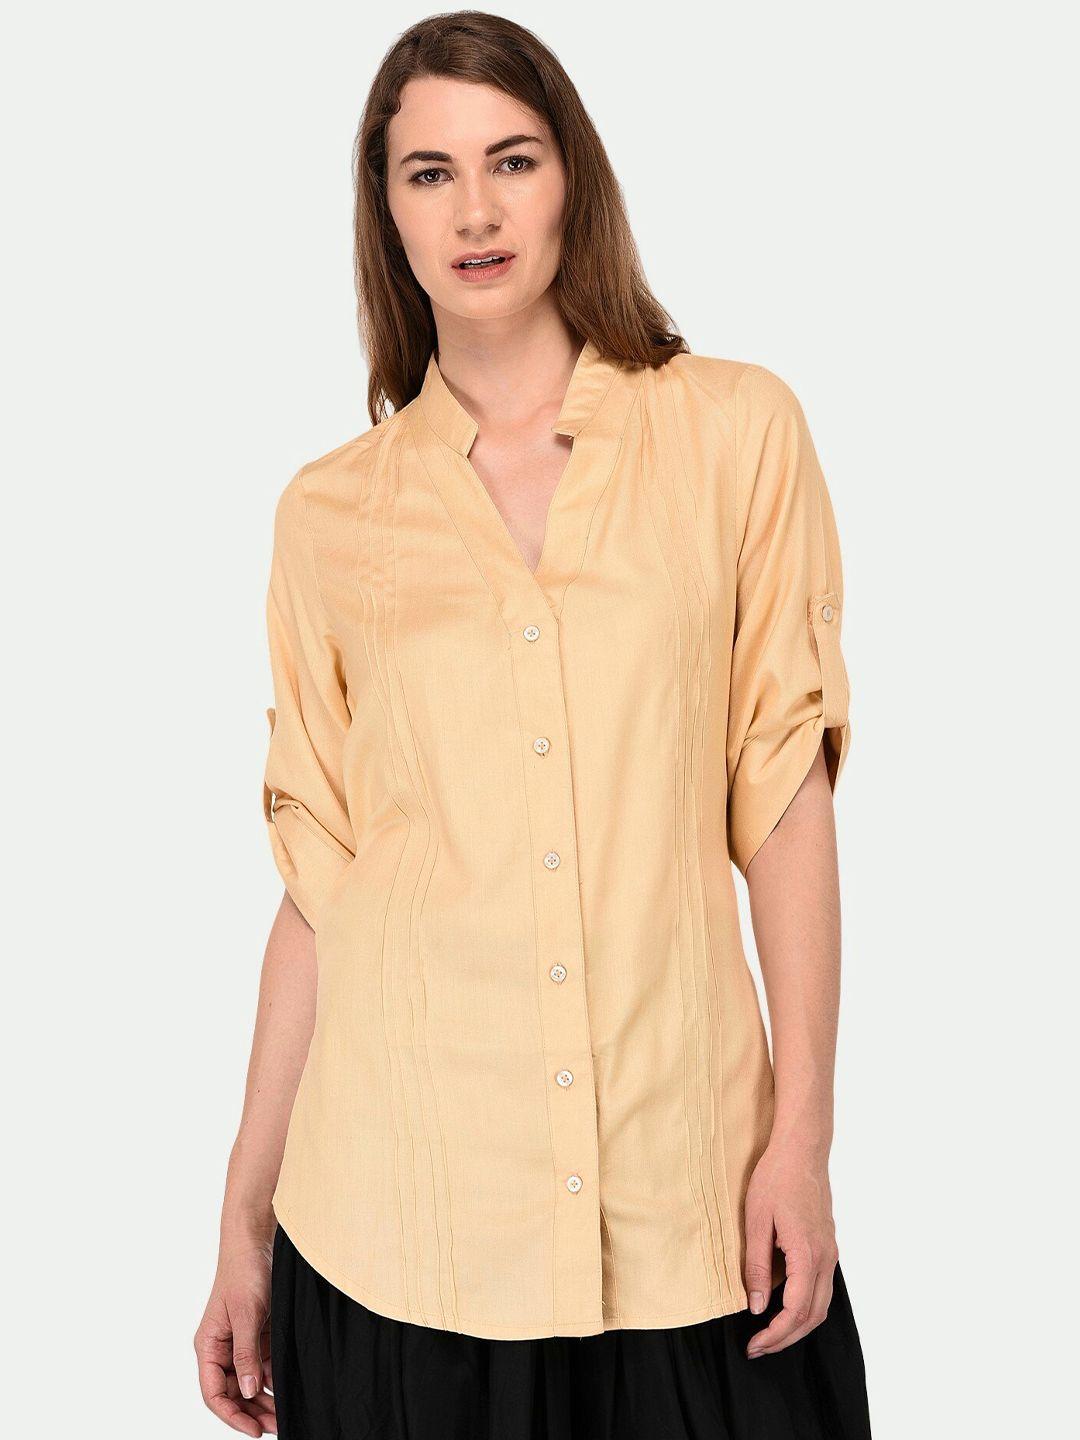 patrorna-women-gold-toned-comfort-casual-shirt